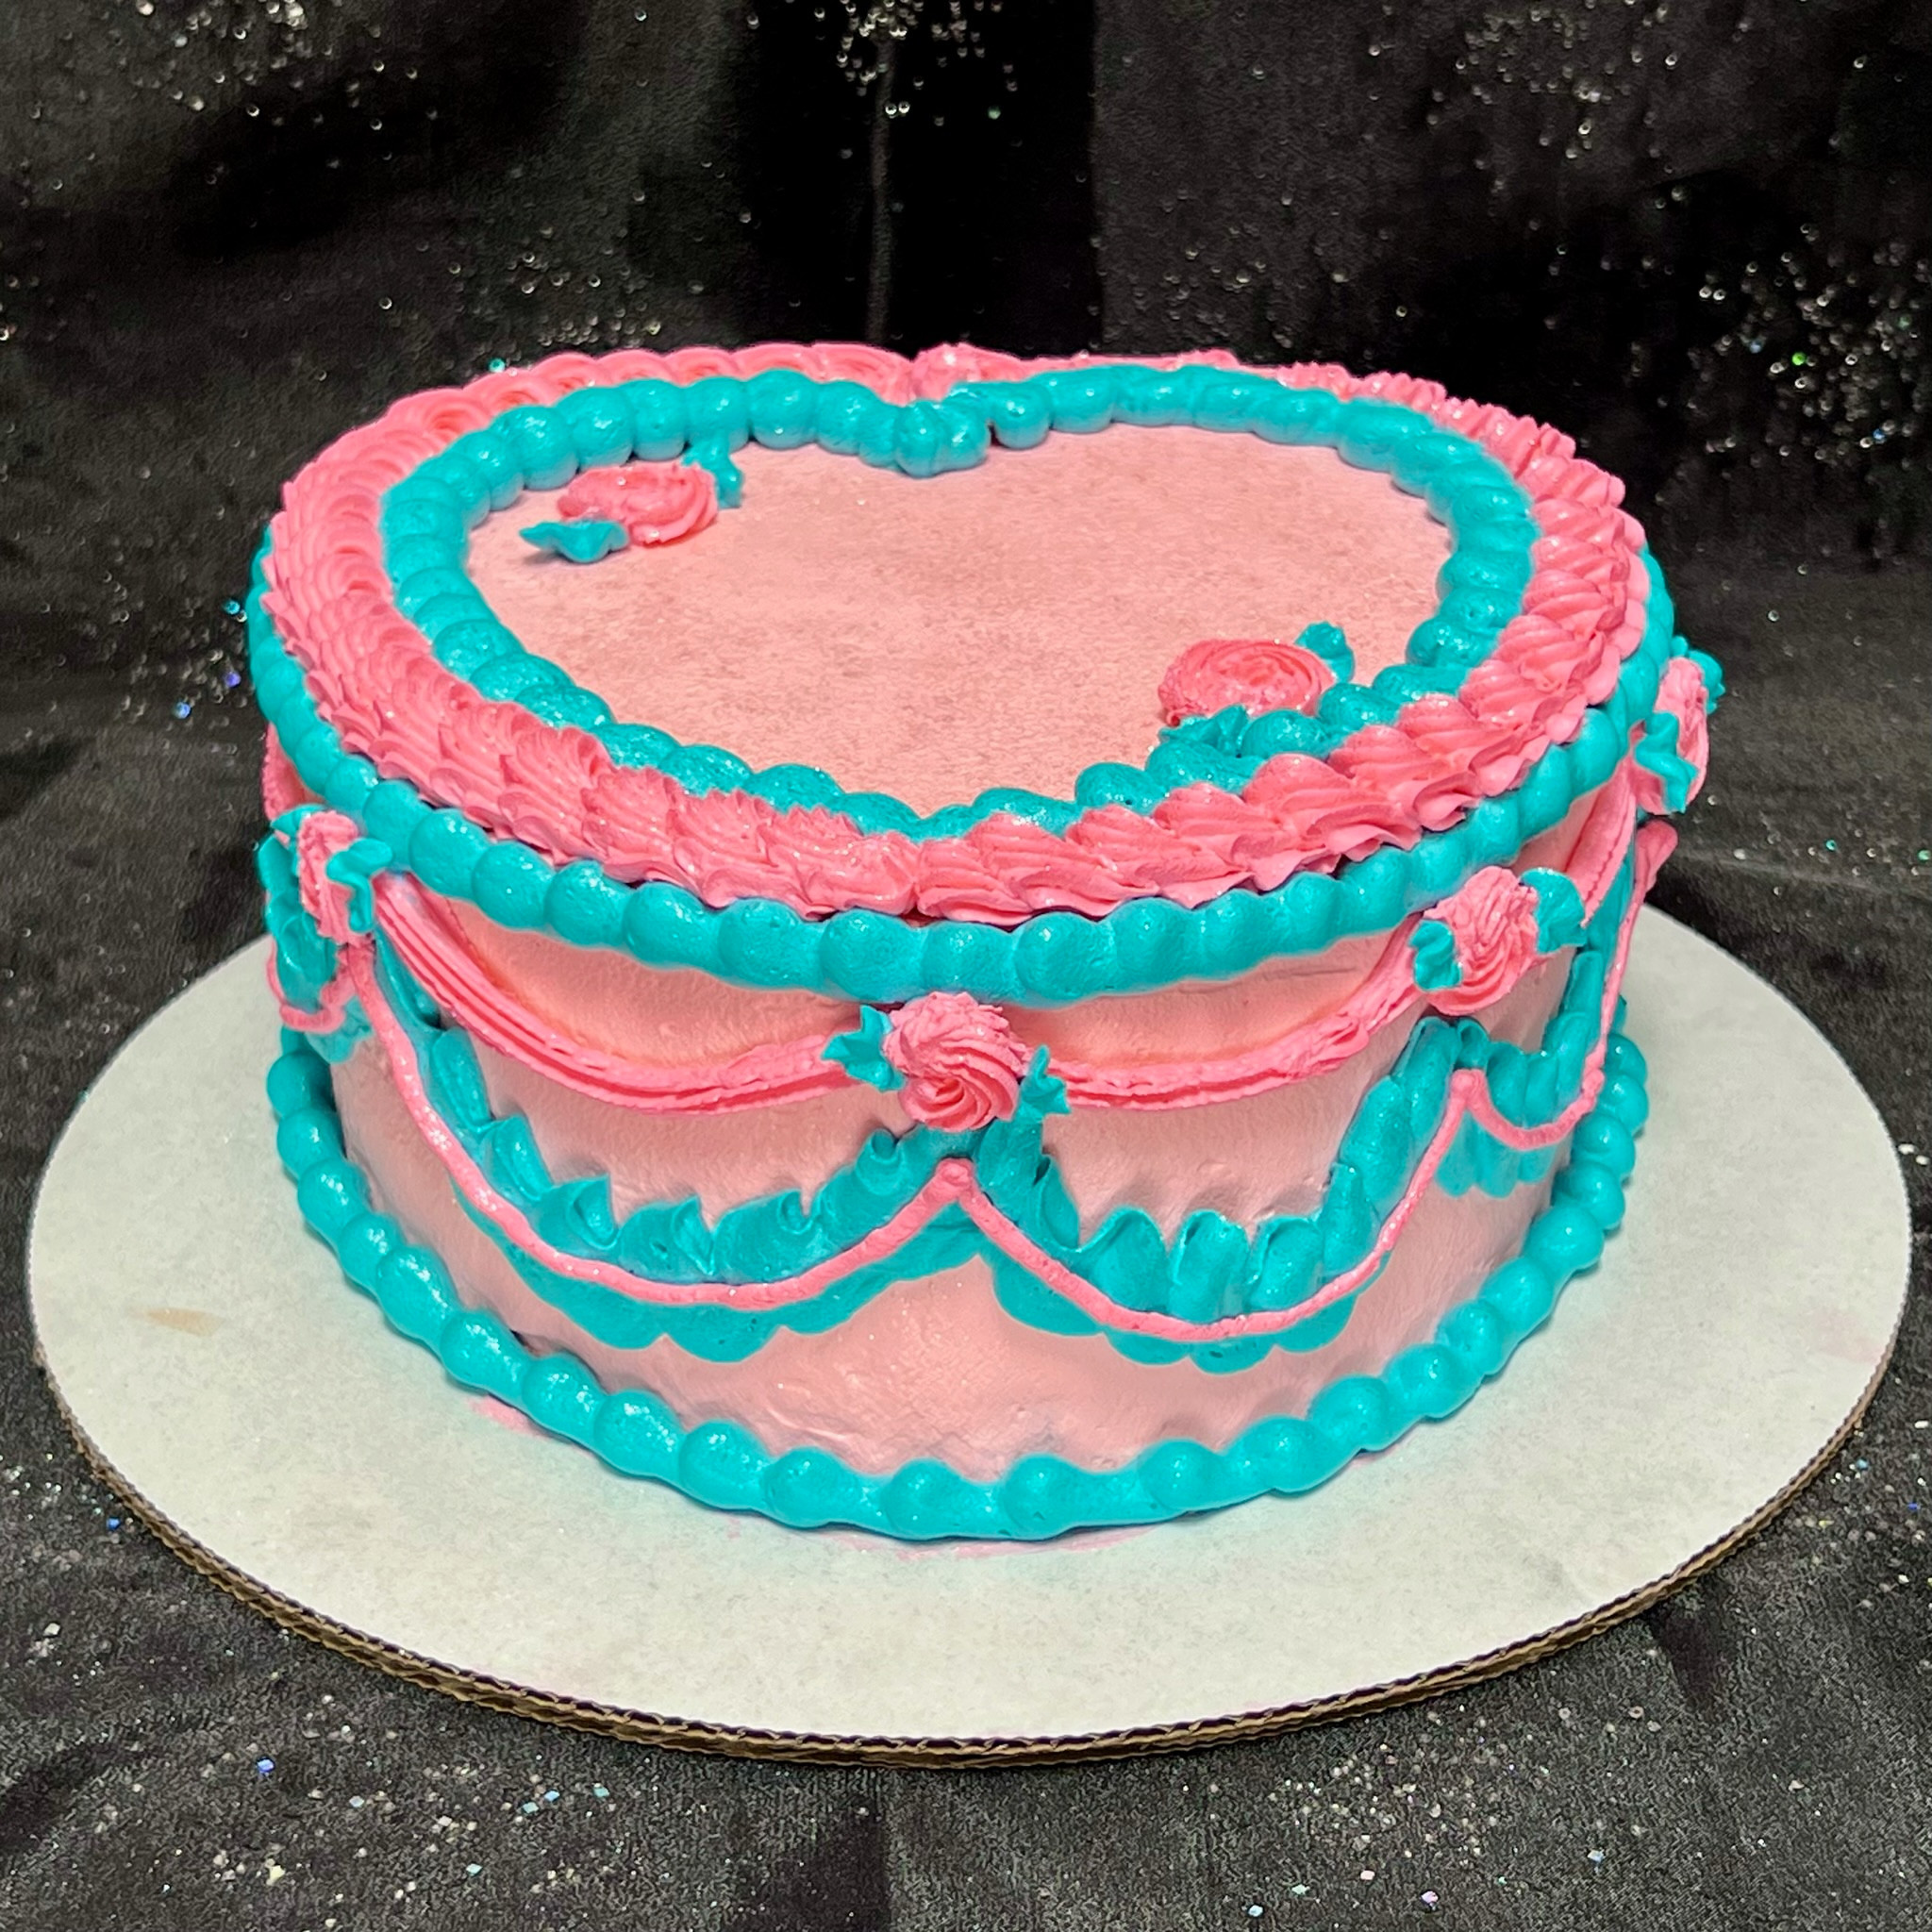 Little Girl's Pink Fondant Birthday Cake Part II